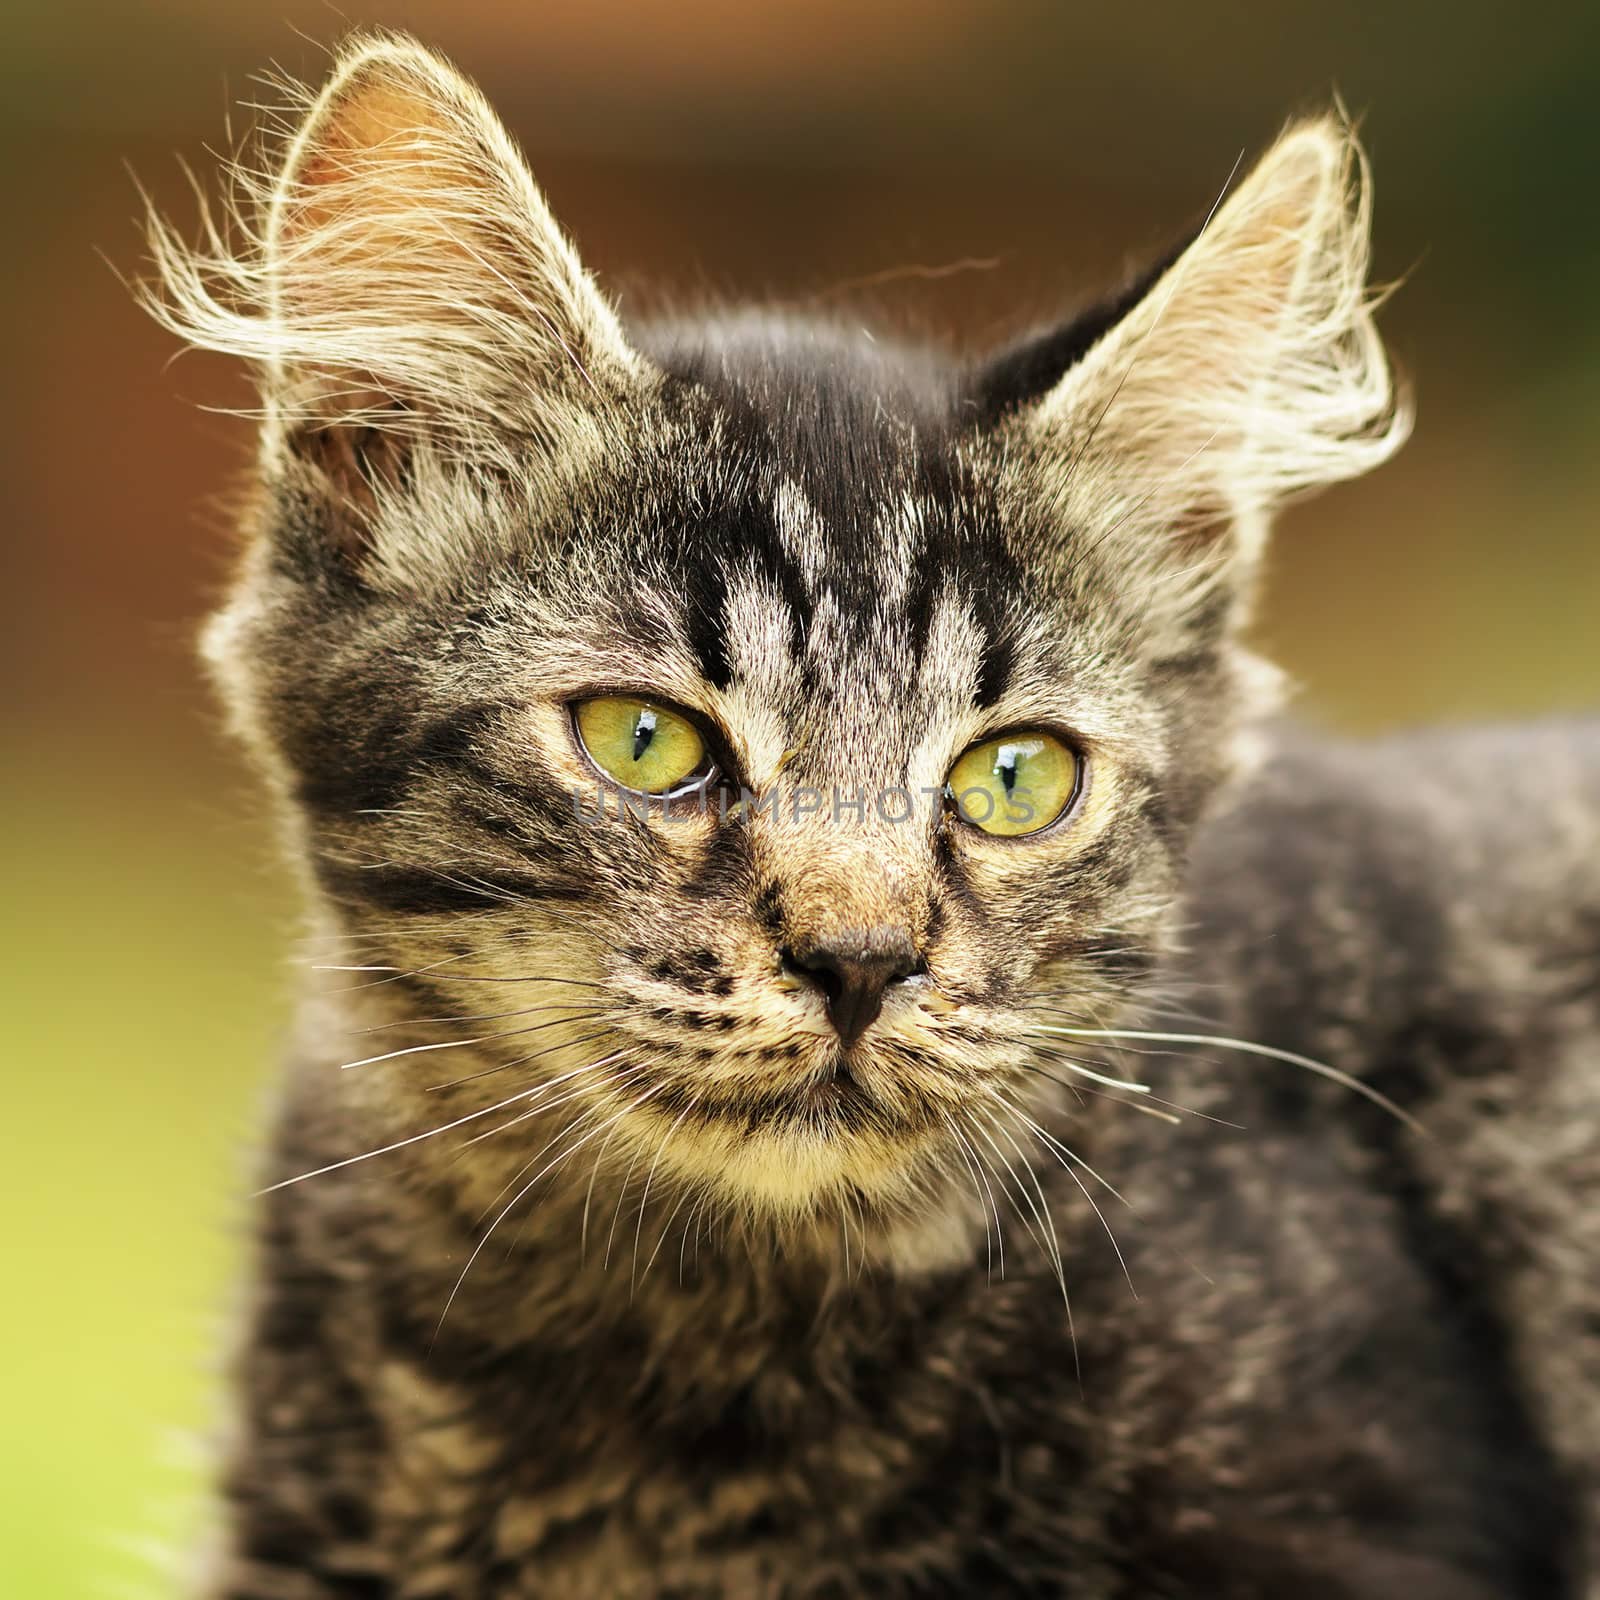 cute striped kitten portrait, domestic beautiful animal face